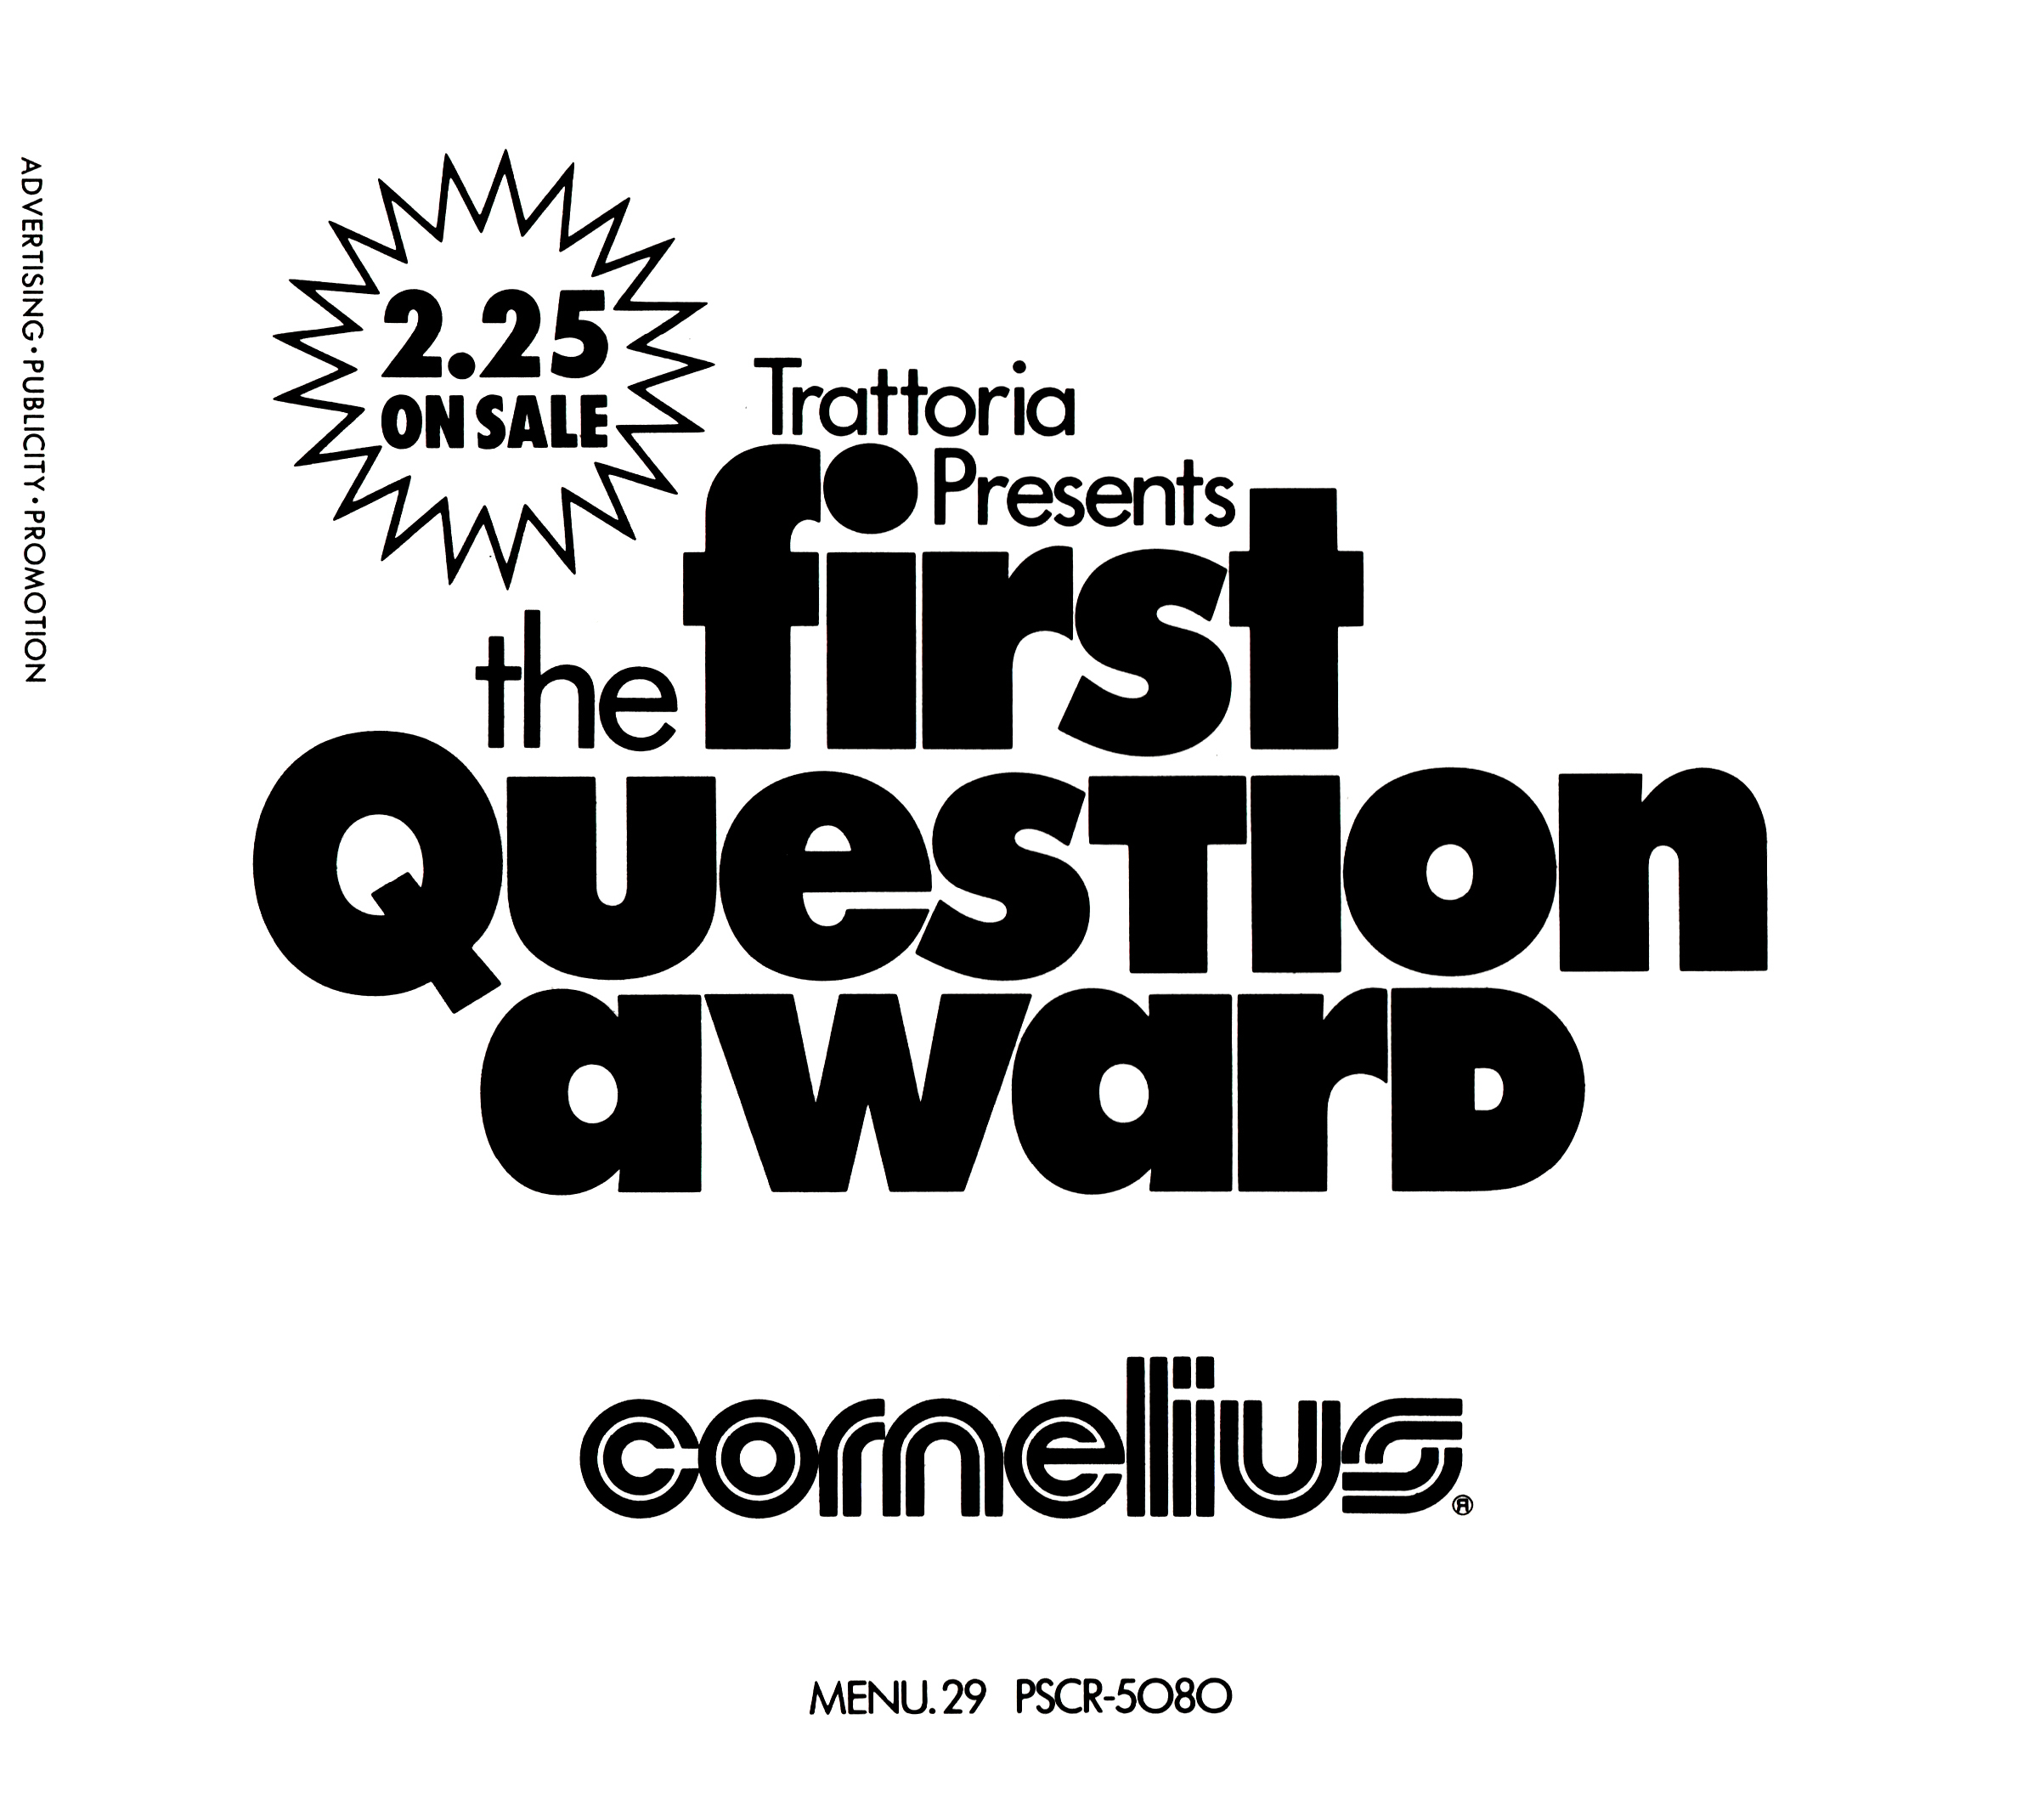 Cornelius (コーネリアス) 1stアルバム『THE FIRST QUESTION AWARD